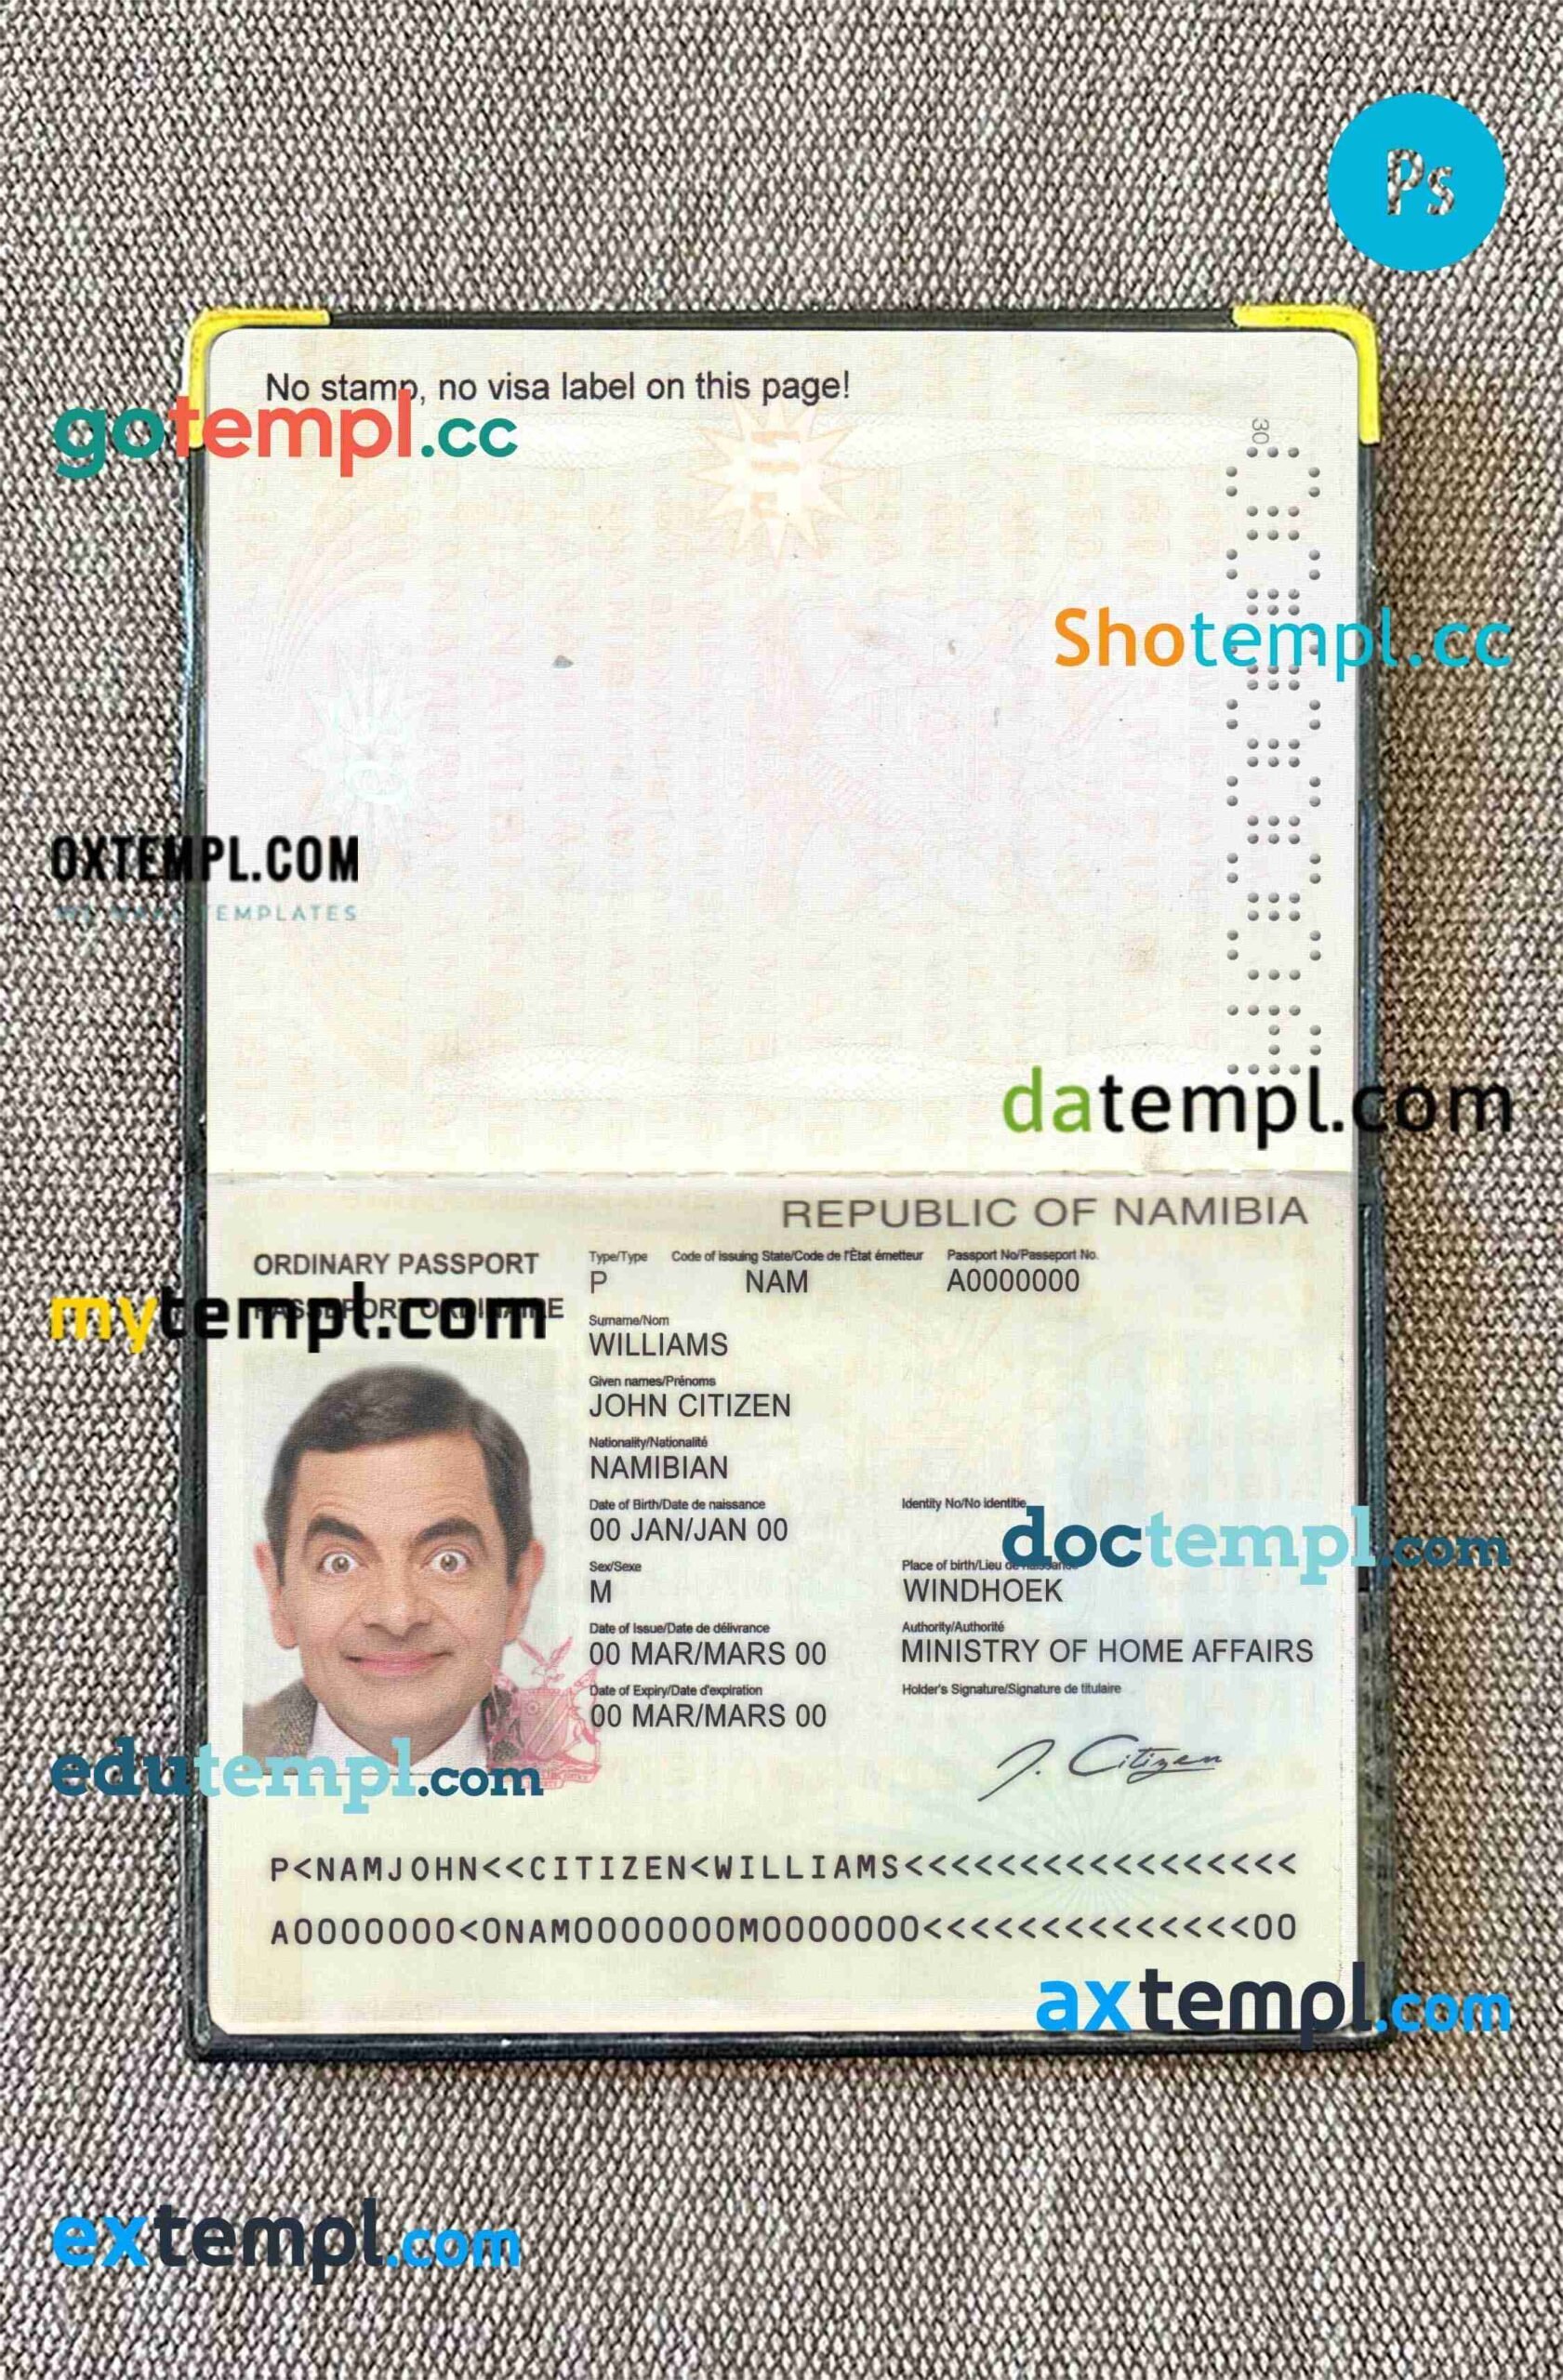 Tajikistan ID card PSD template, completely editable